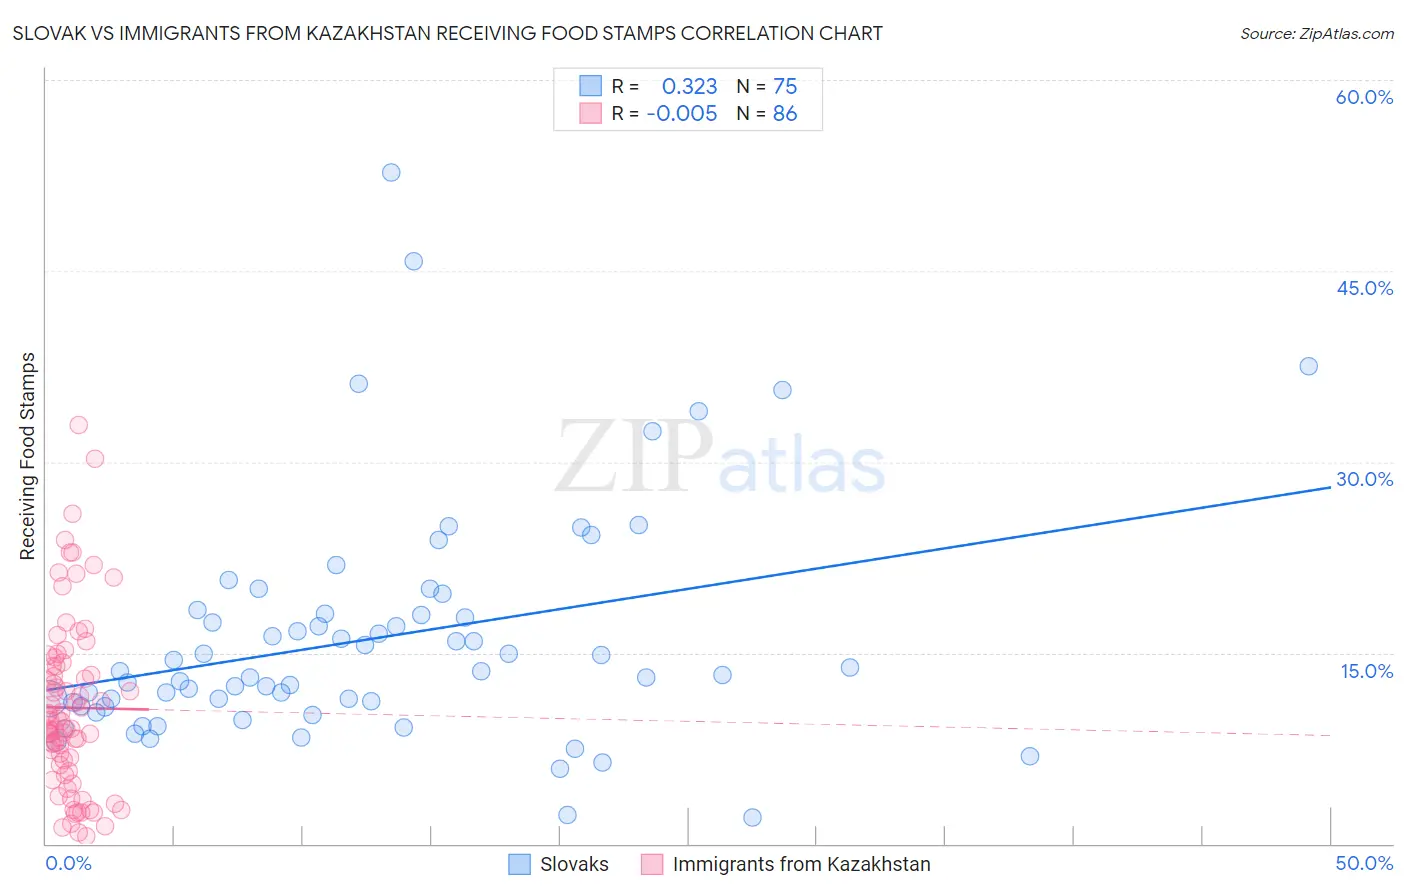 Slovak vs Immigrants from Kazakhstan Receiving Food Stamps